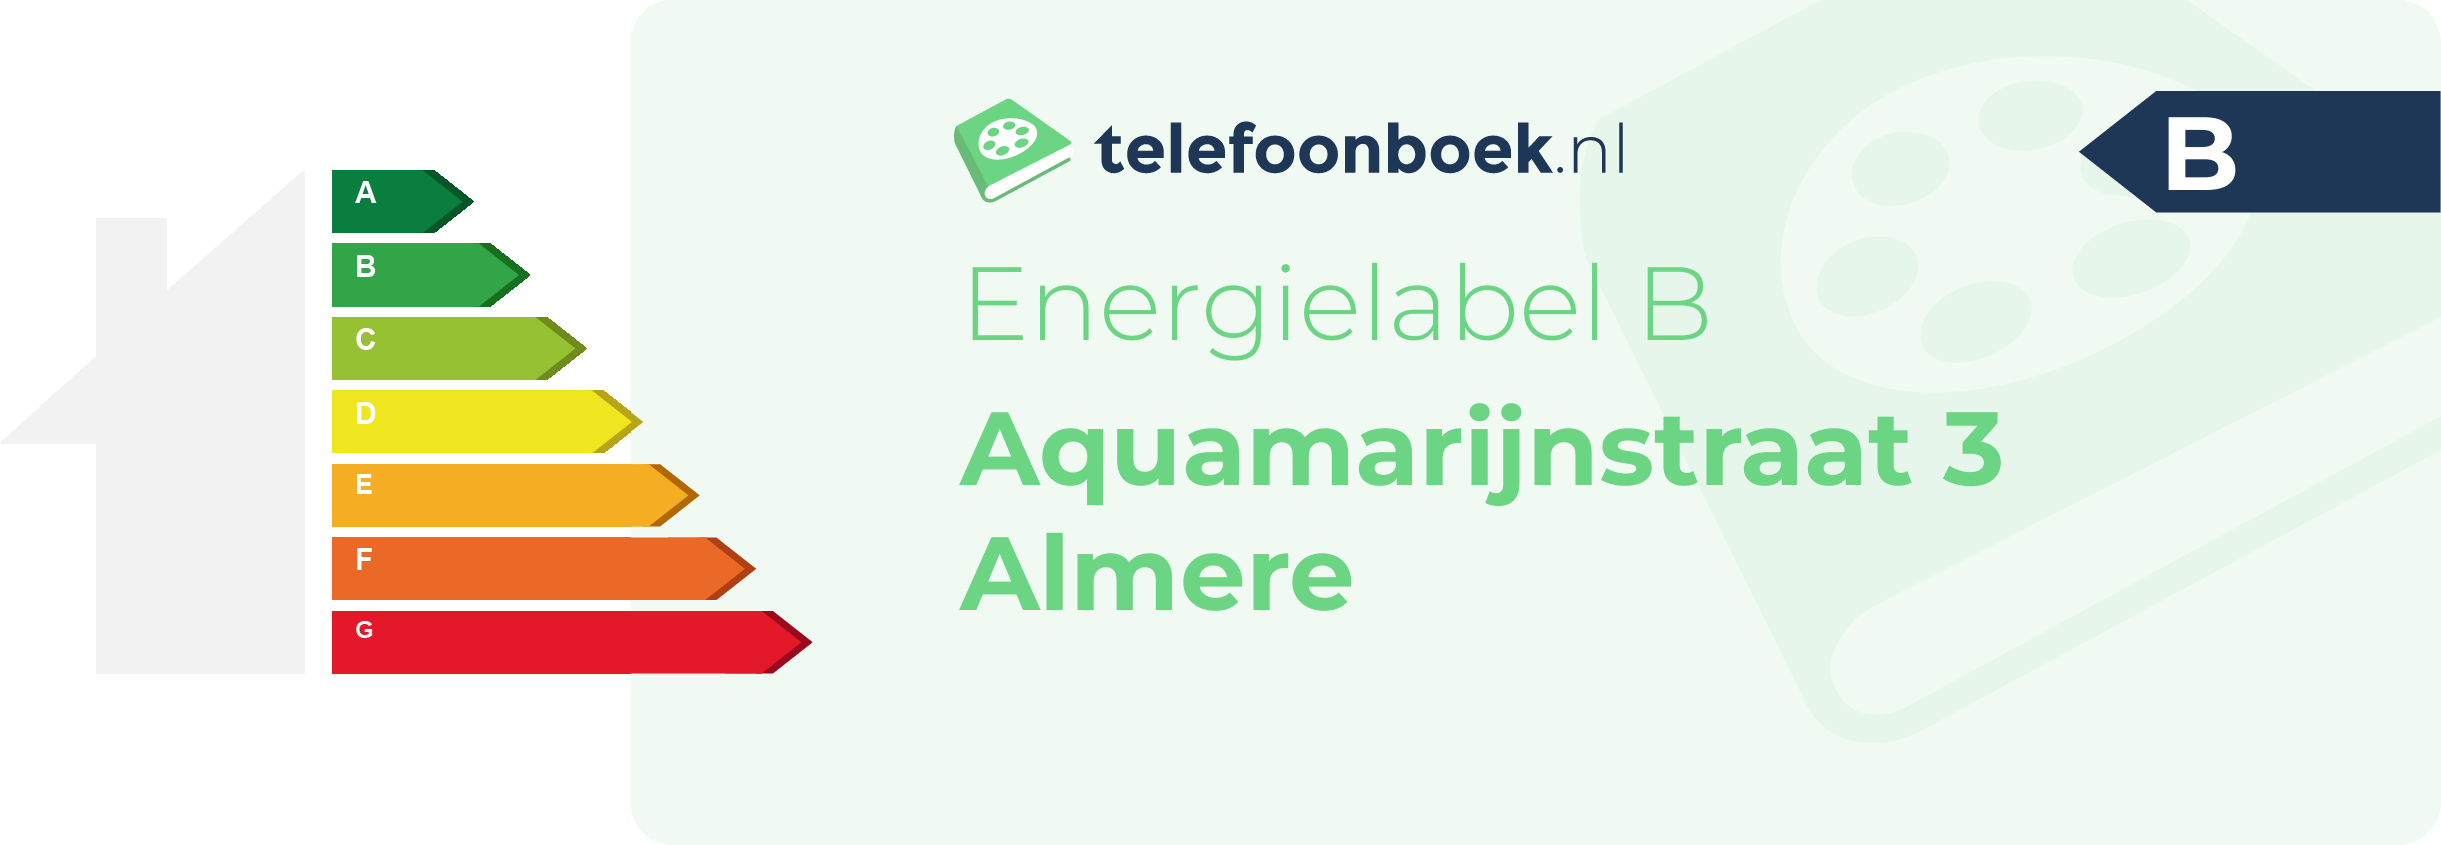 Energielabel Aquamarijnstraat 3 Almere